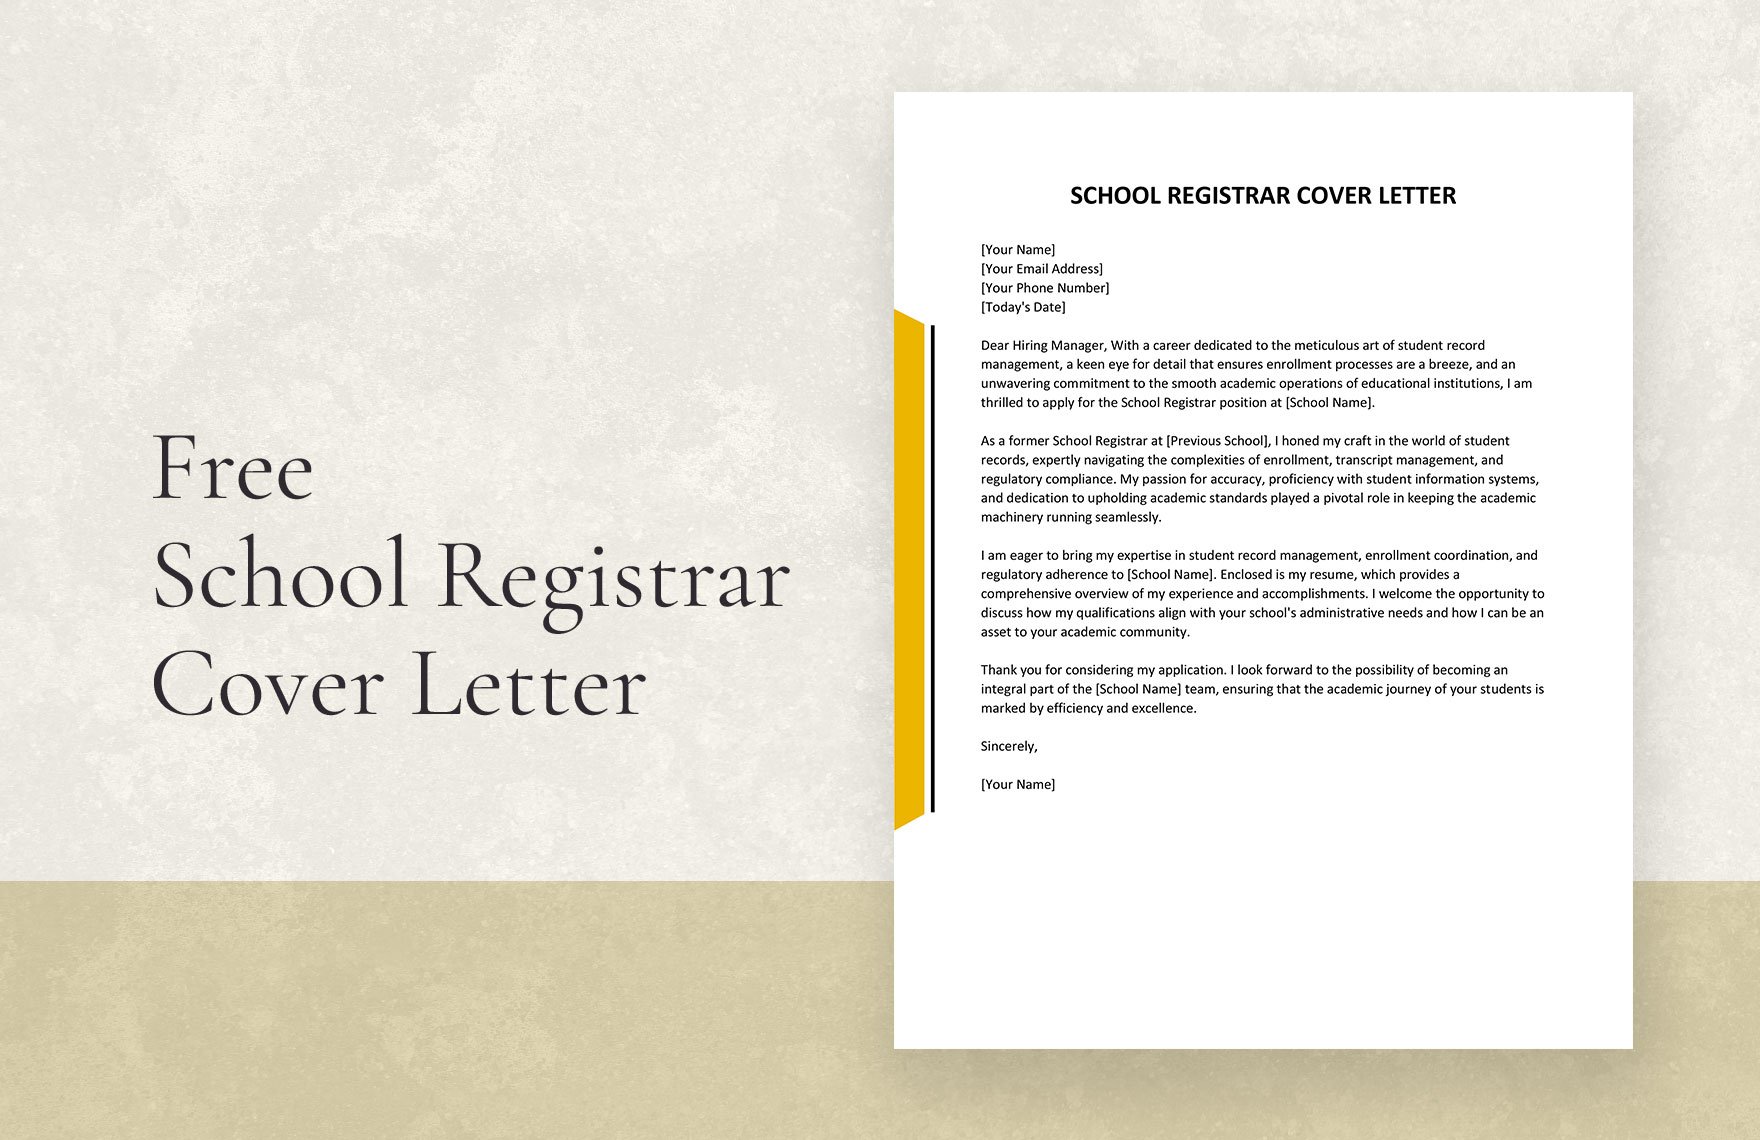 School Registrar Cover Letter in Word, Google Docs